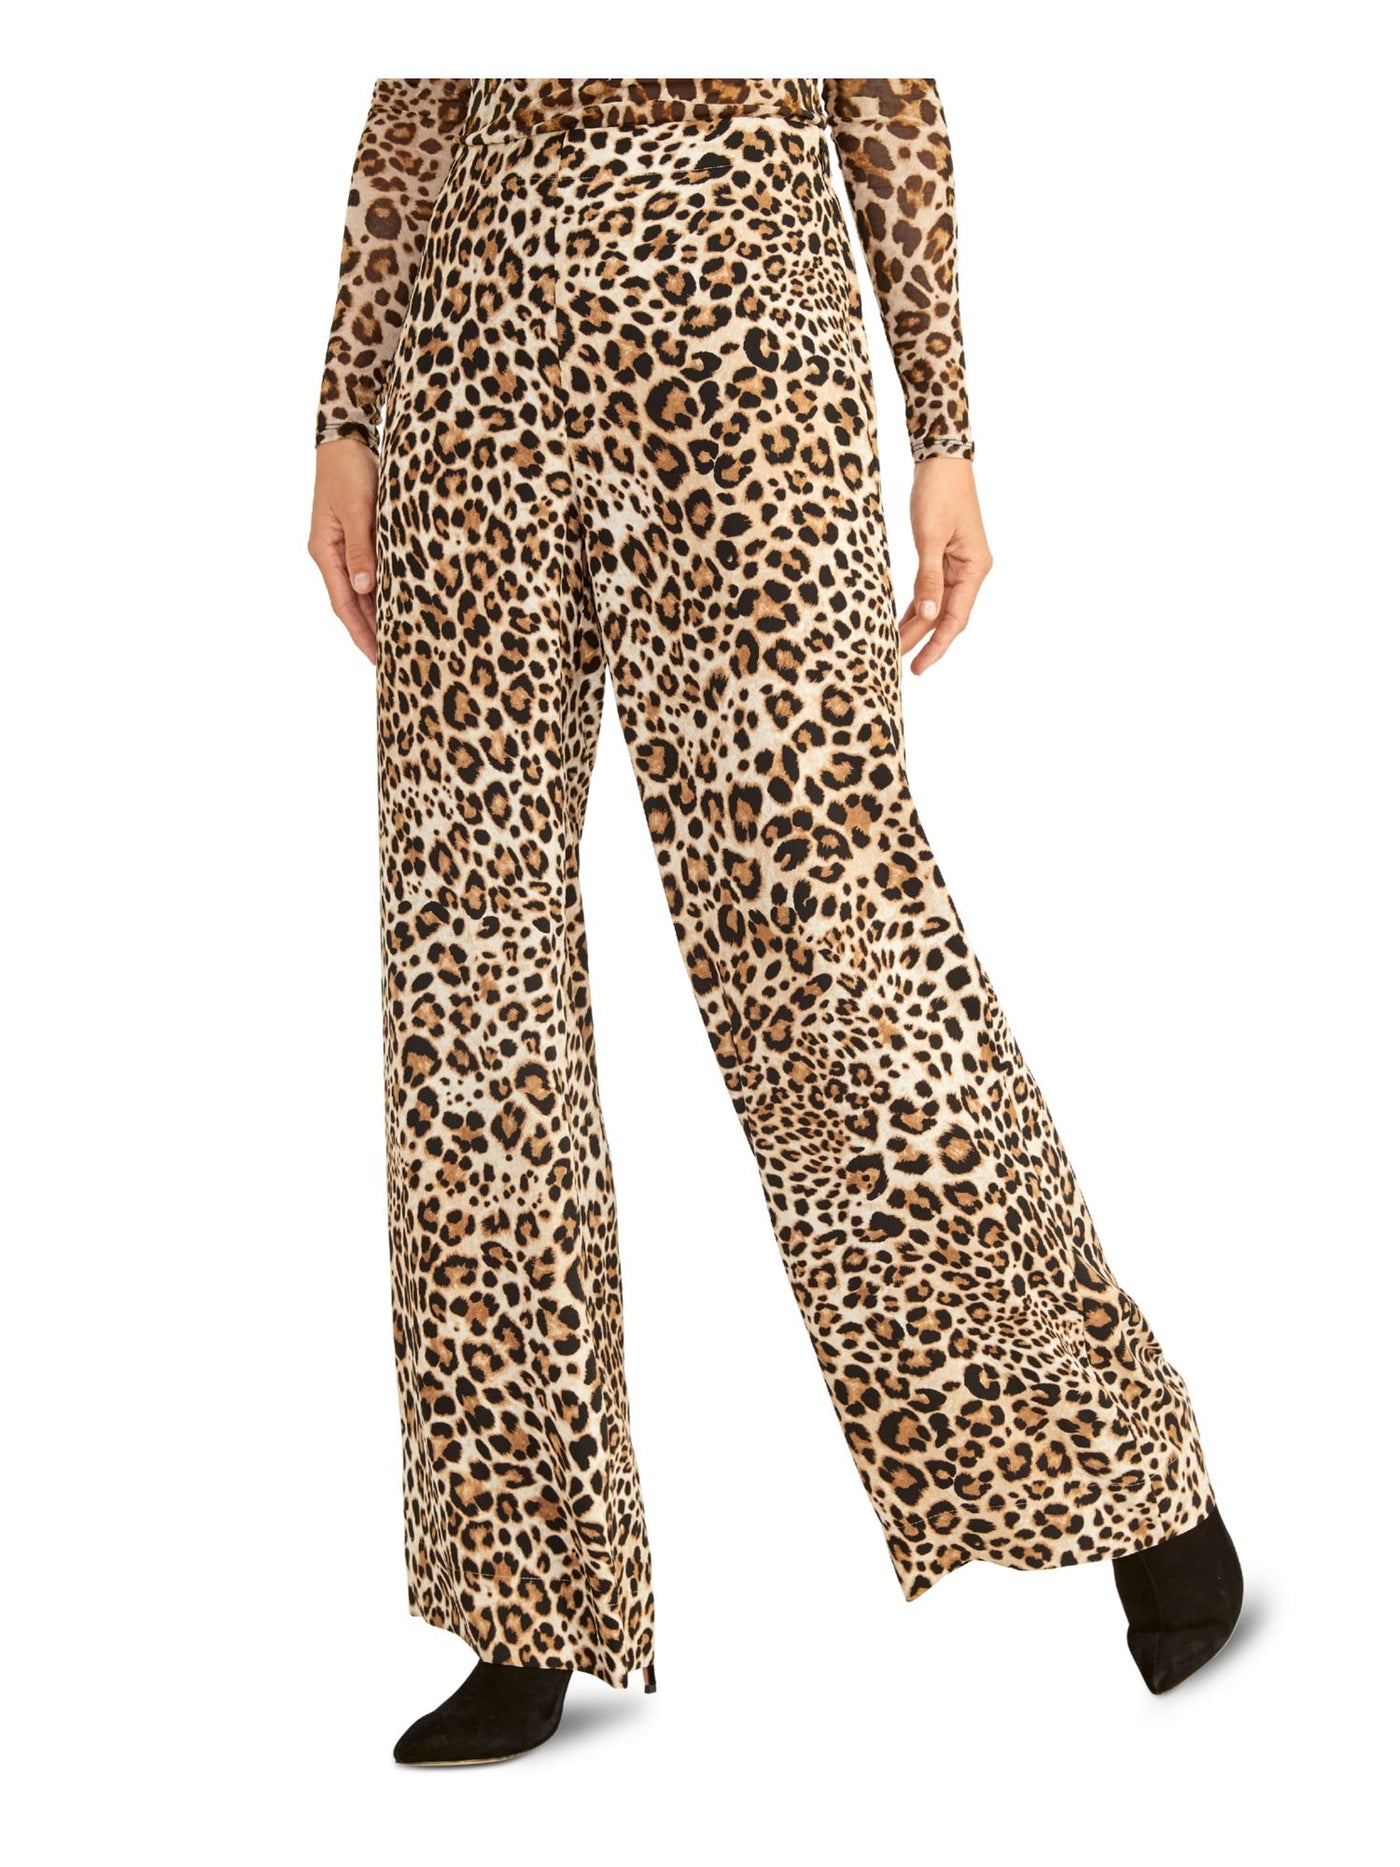 RACHEL ROY Womens Brown Zippered Animal Print Pants 0